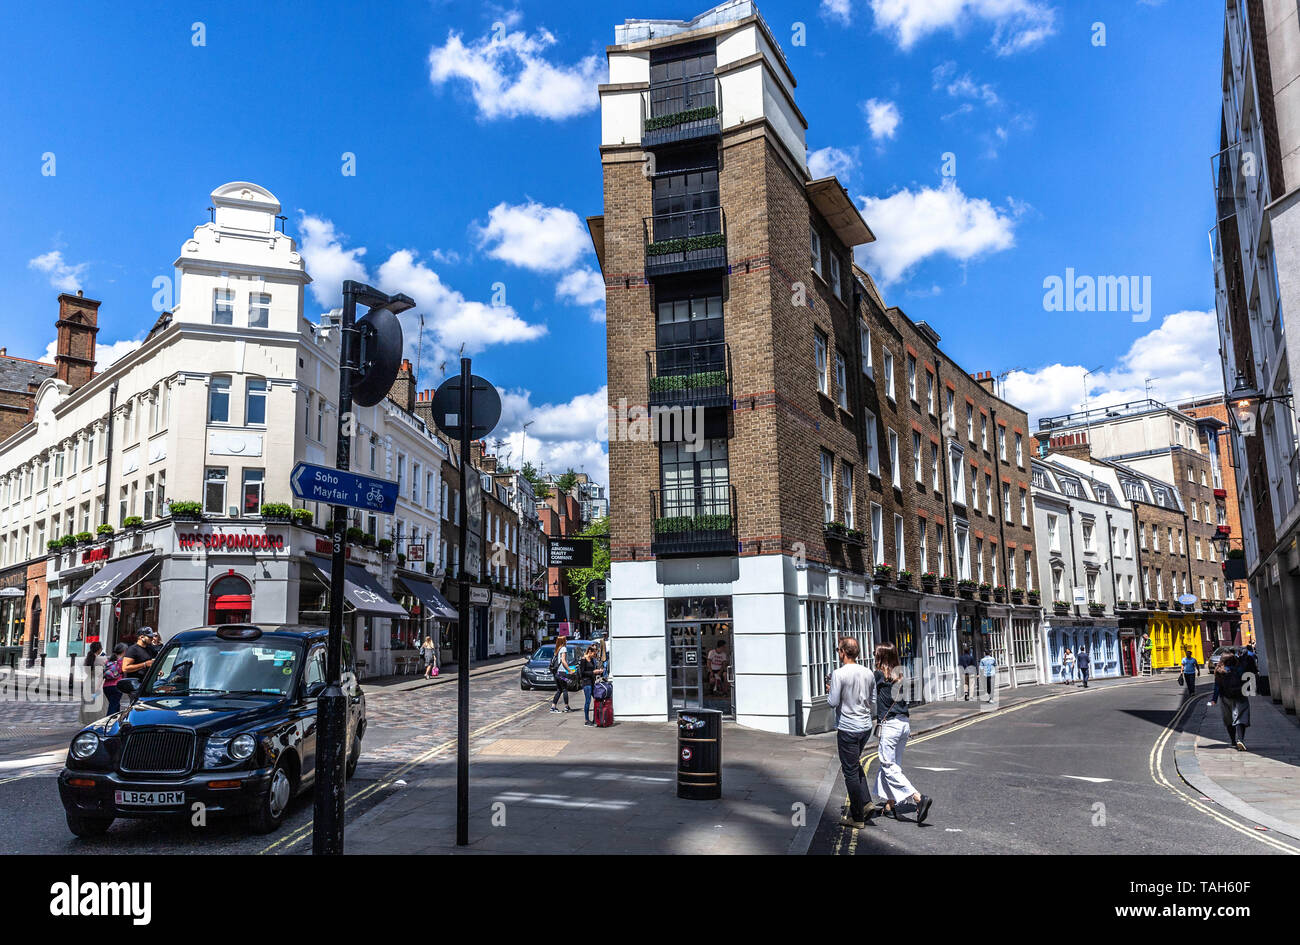 Covent Garden street scene, London, WC2H, England, UK. Stock Photo